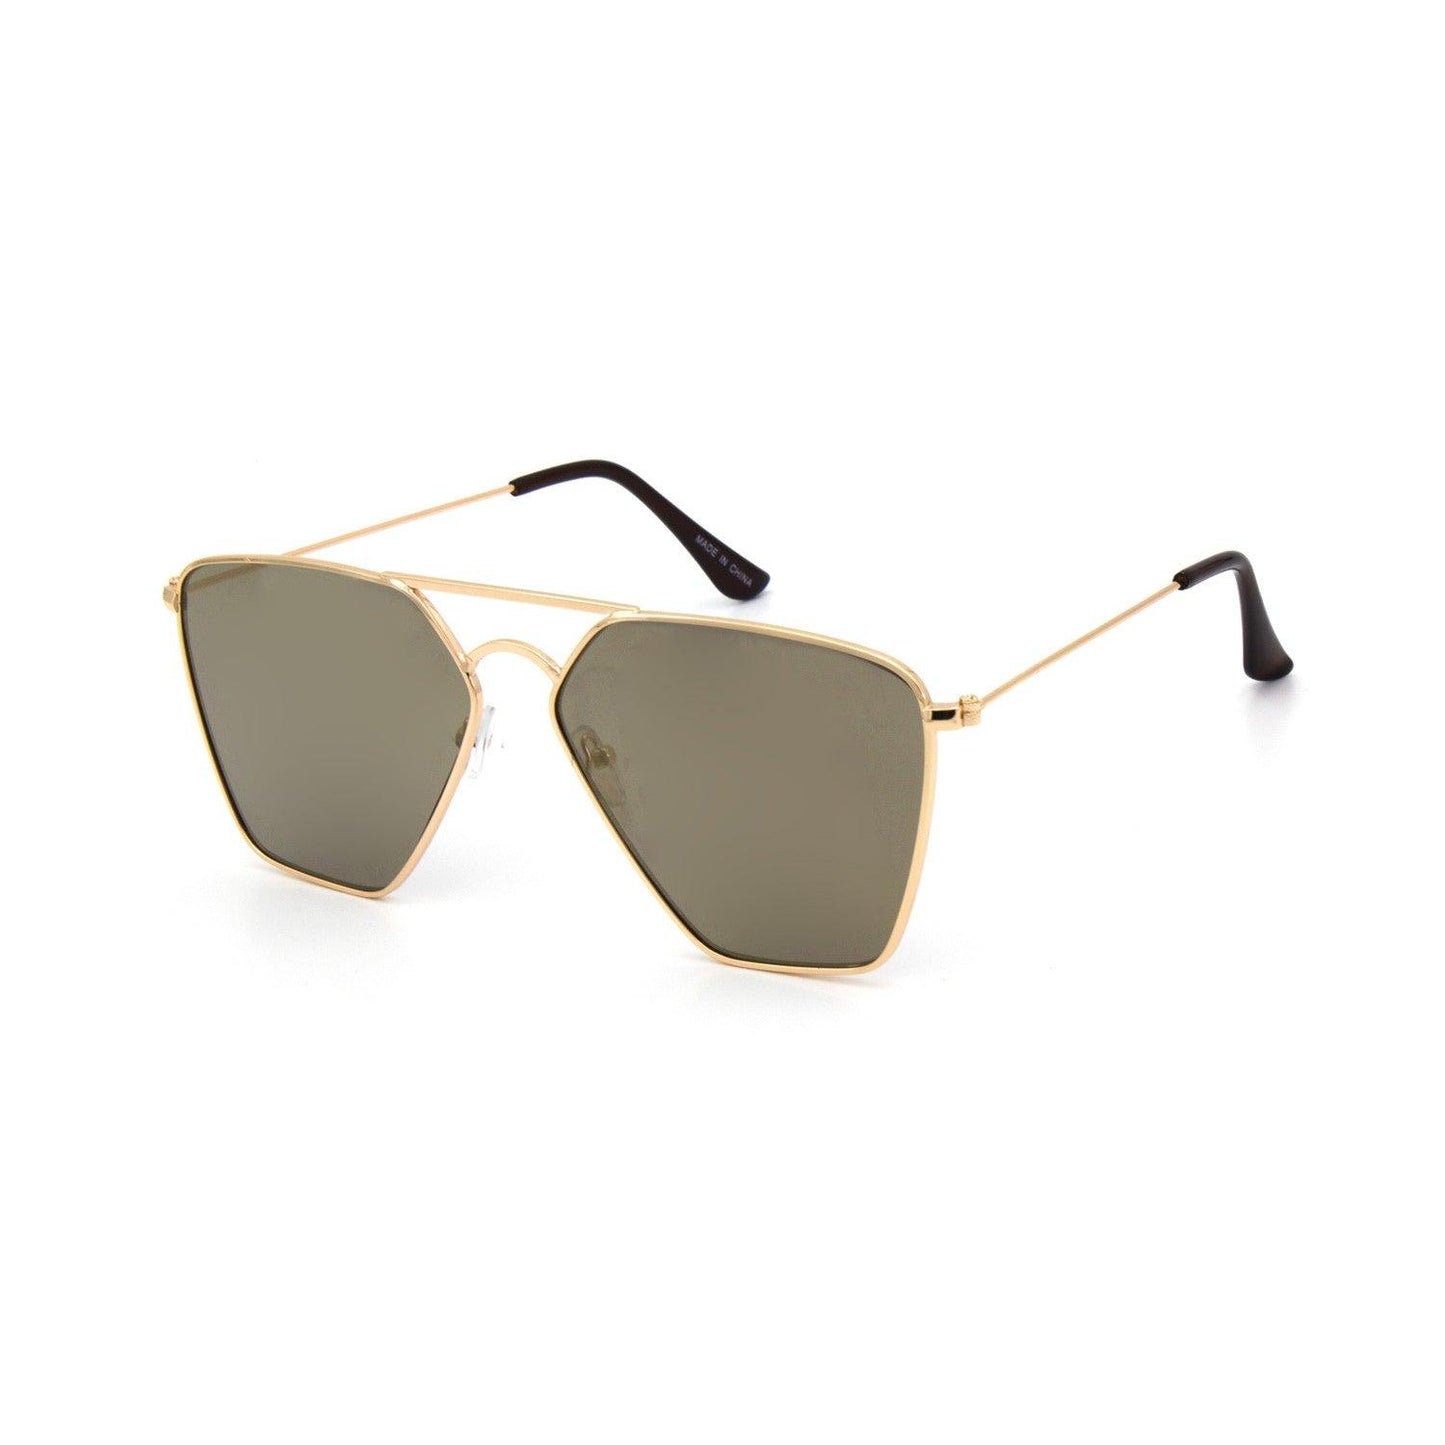 "Gemini" Oversize Metal Sunglasses - Weekend Shade Sunglasses